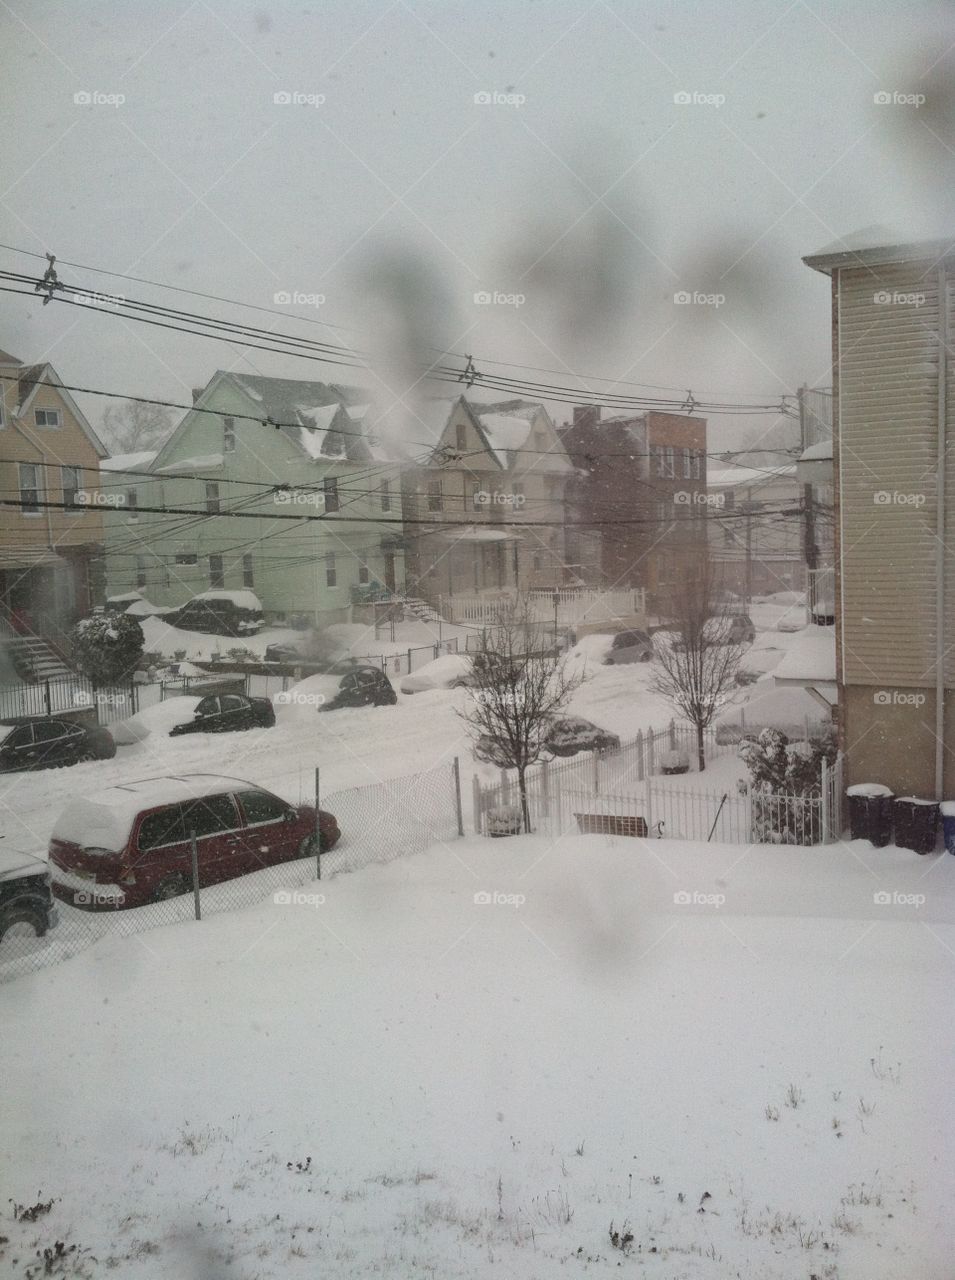 Snow day in the neighborhood 